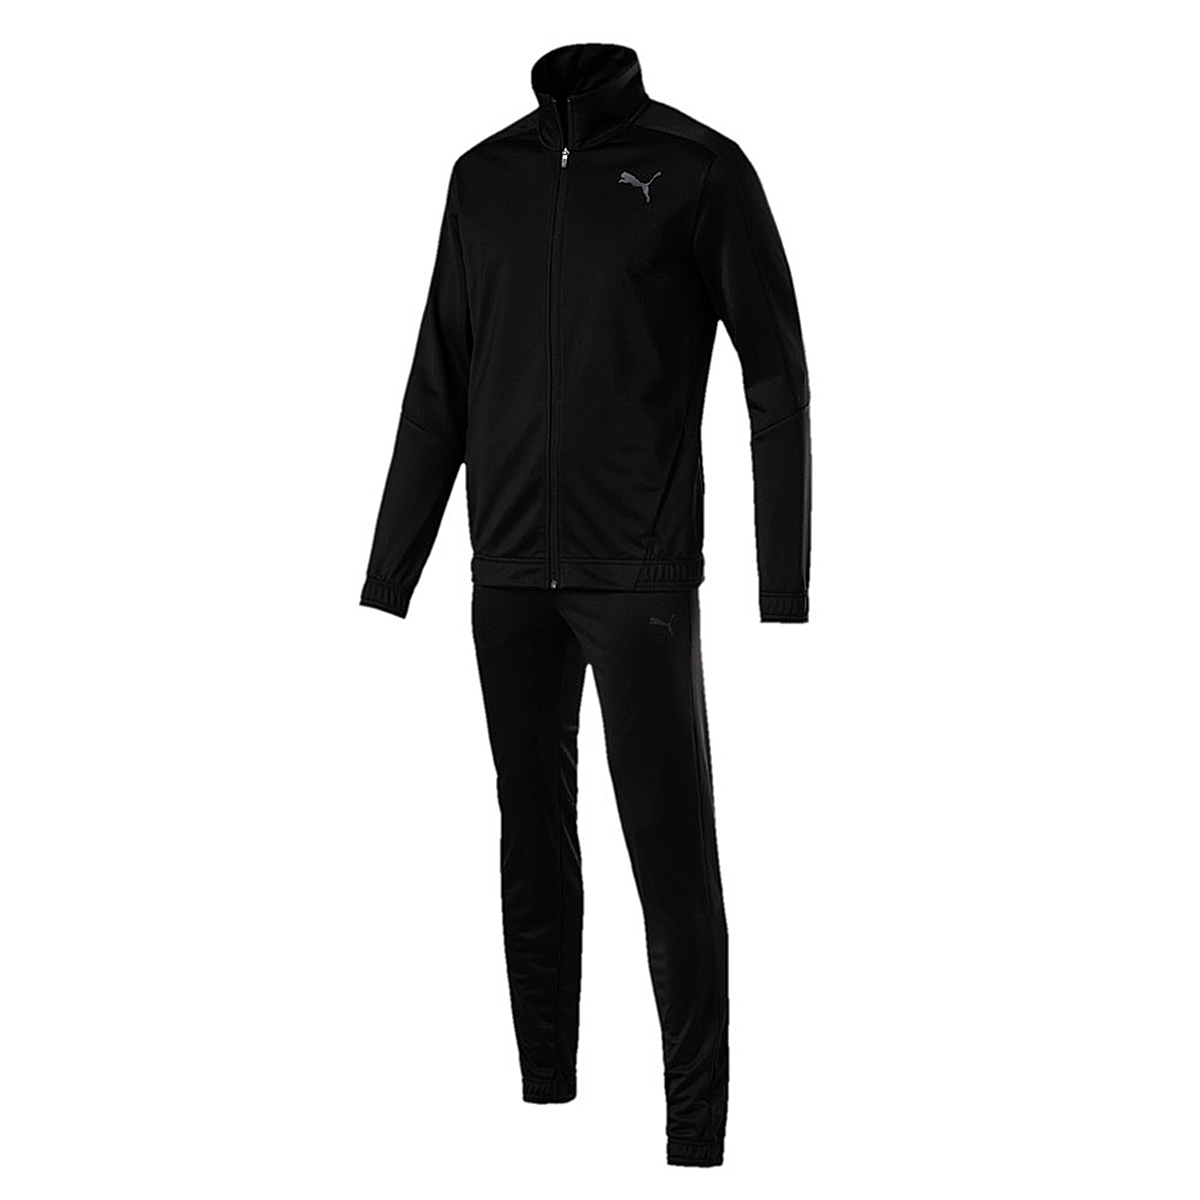 Puma Techstripe Tricot Suit CL Trainigsanzug Herren Fußball Sportanzug 851551